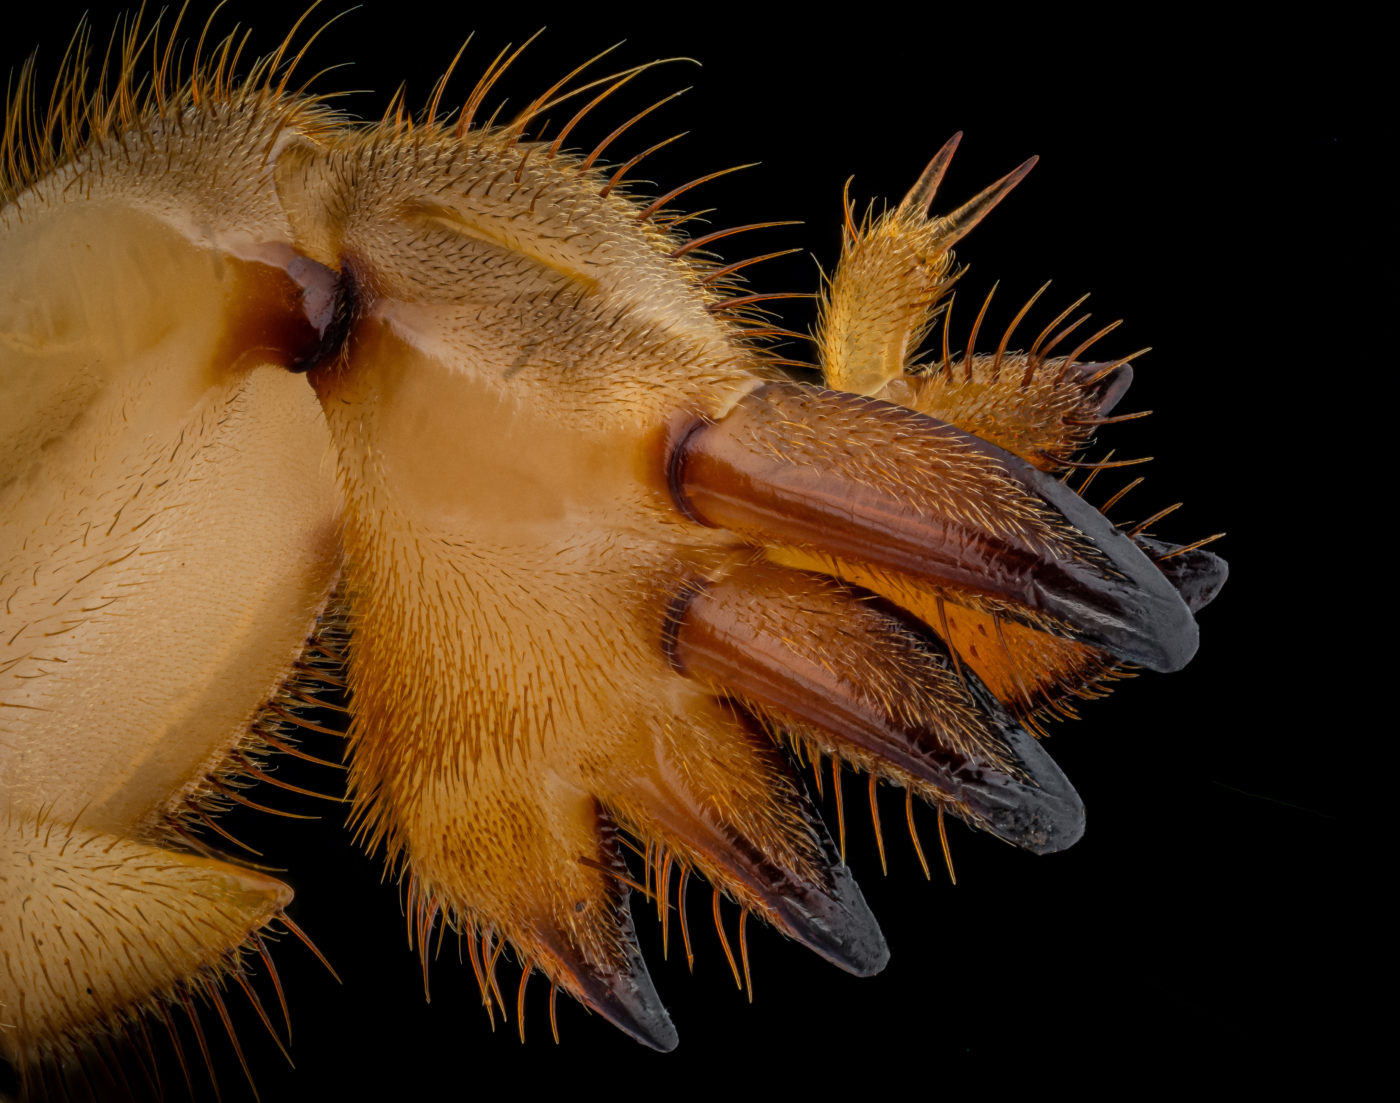 Mole cricket, Gryllotalpa gryllotalpa, foreleg